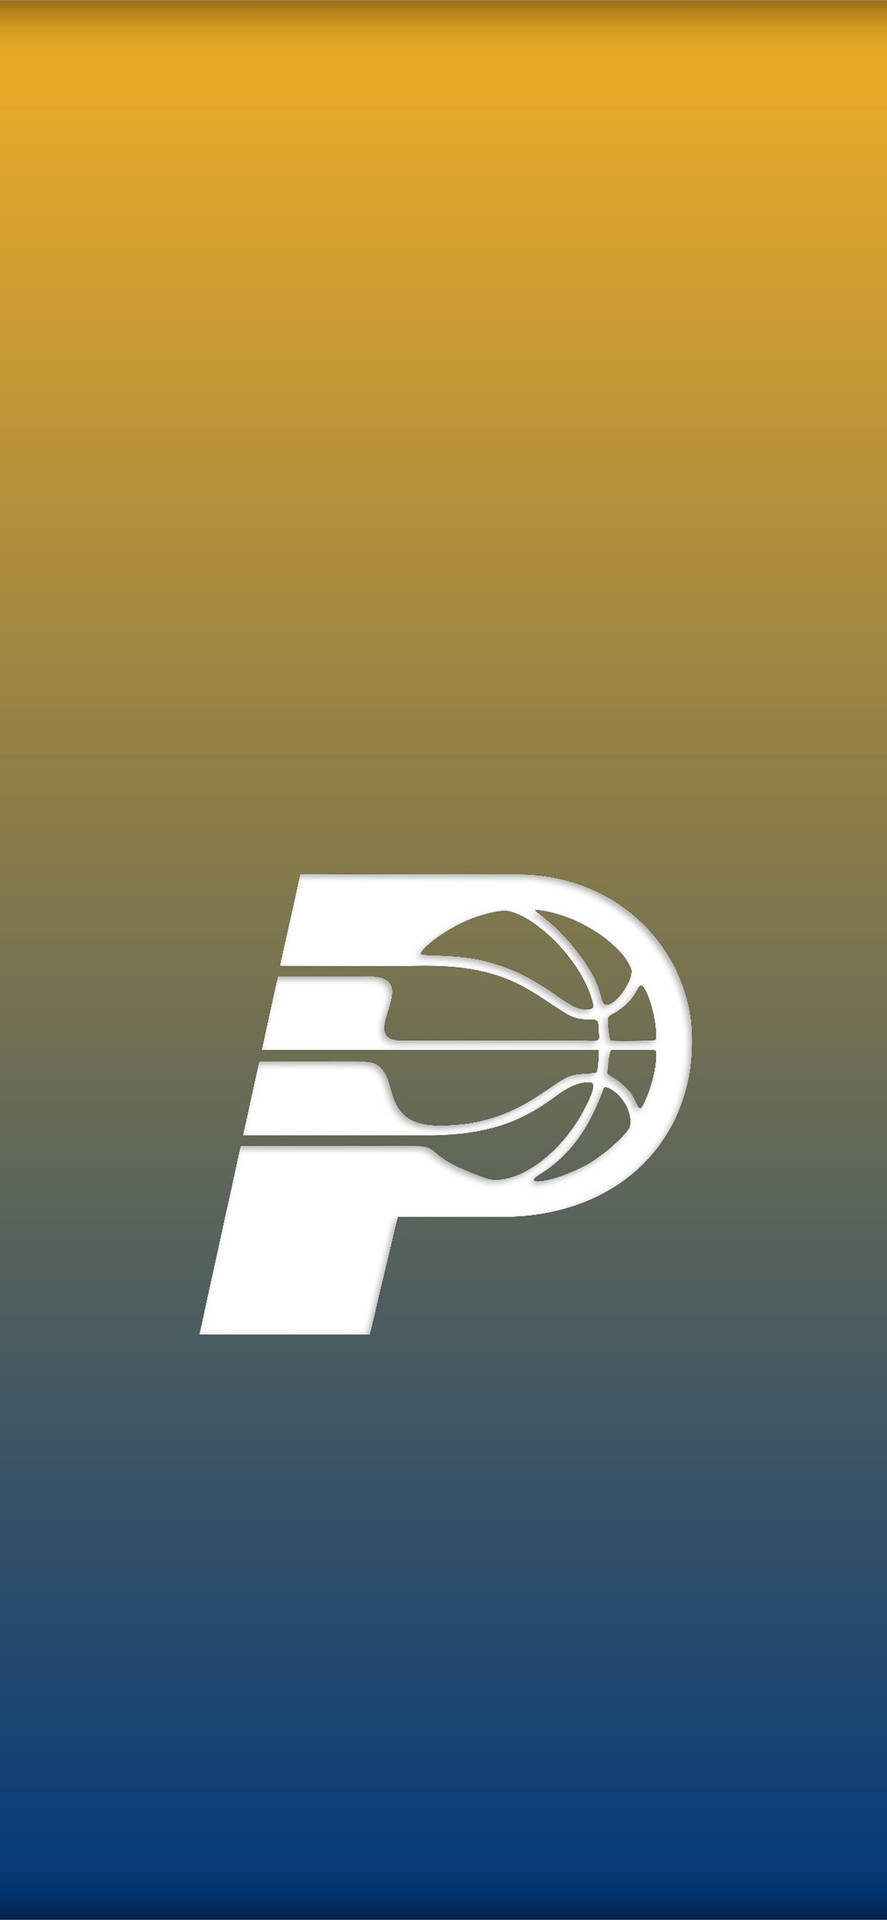 Indiana Pacers Minimalist Team Logo